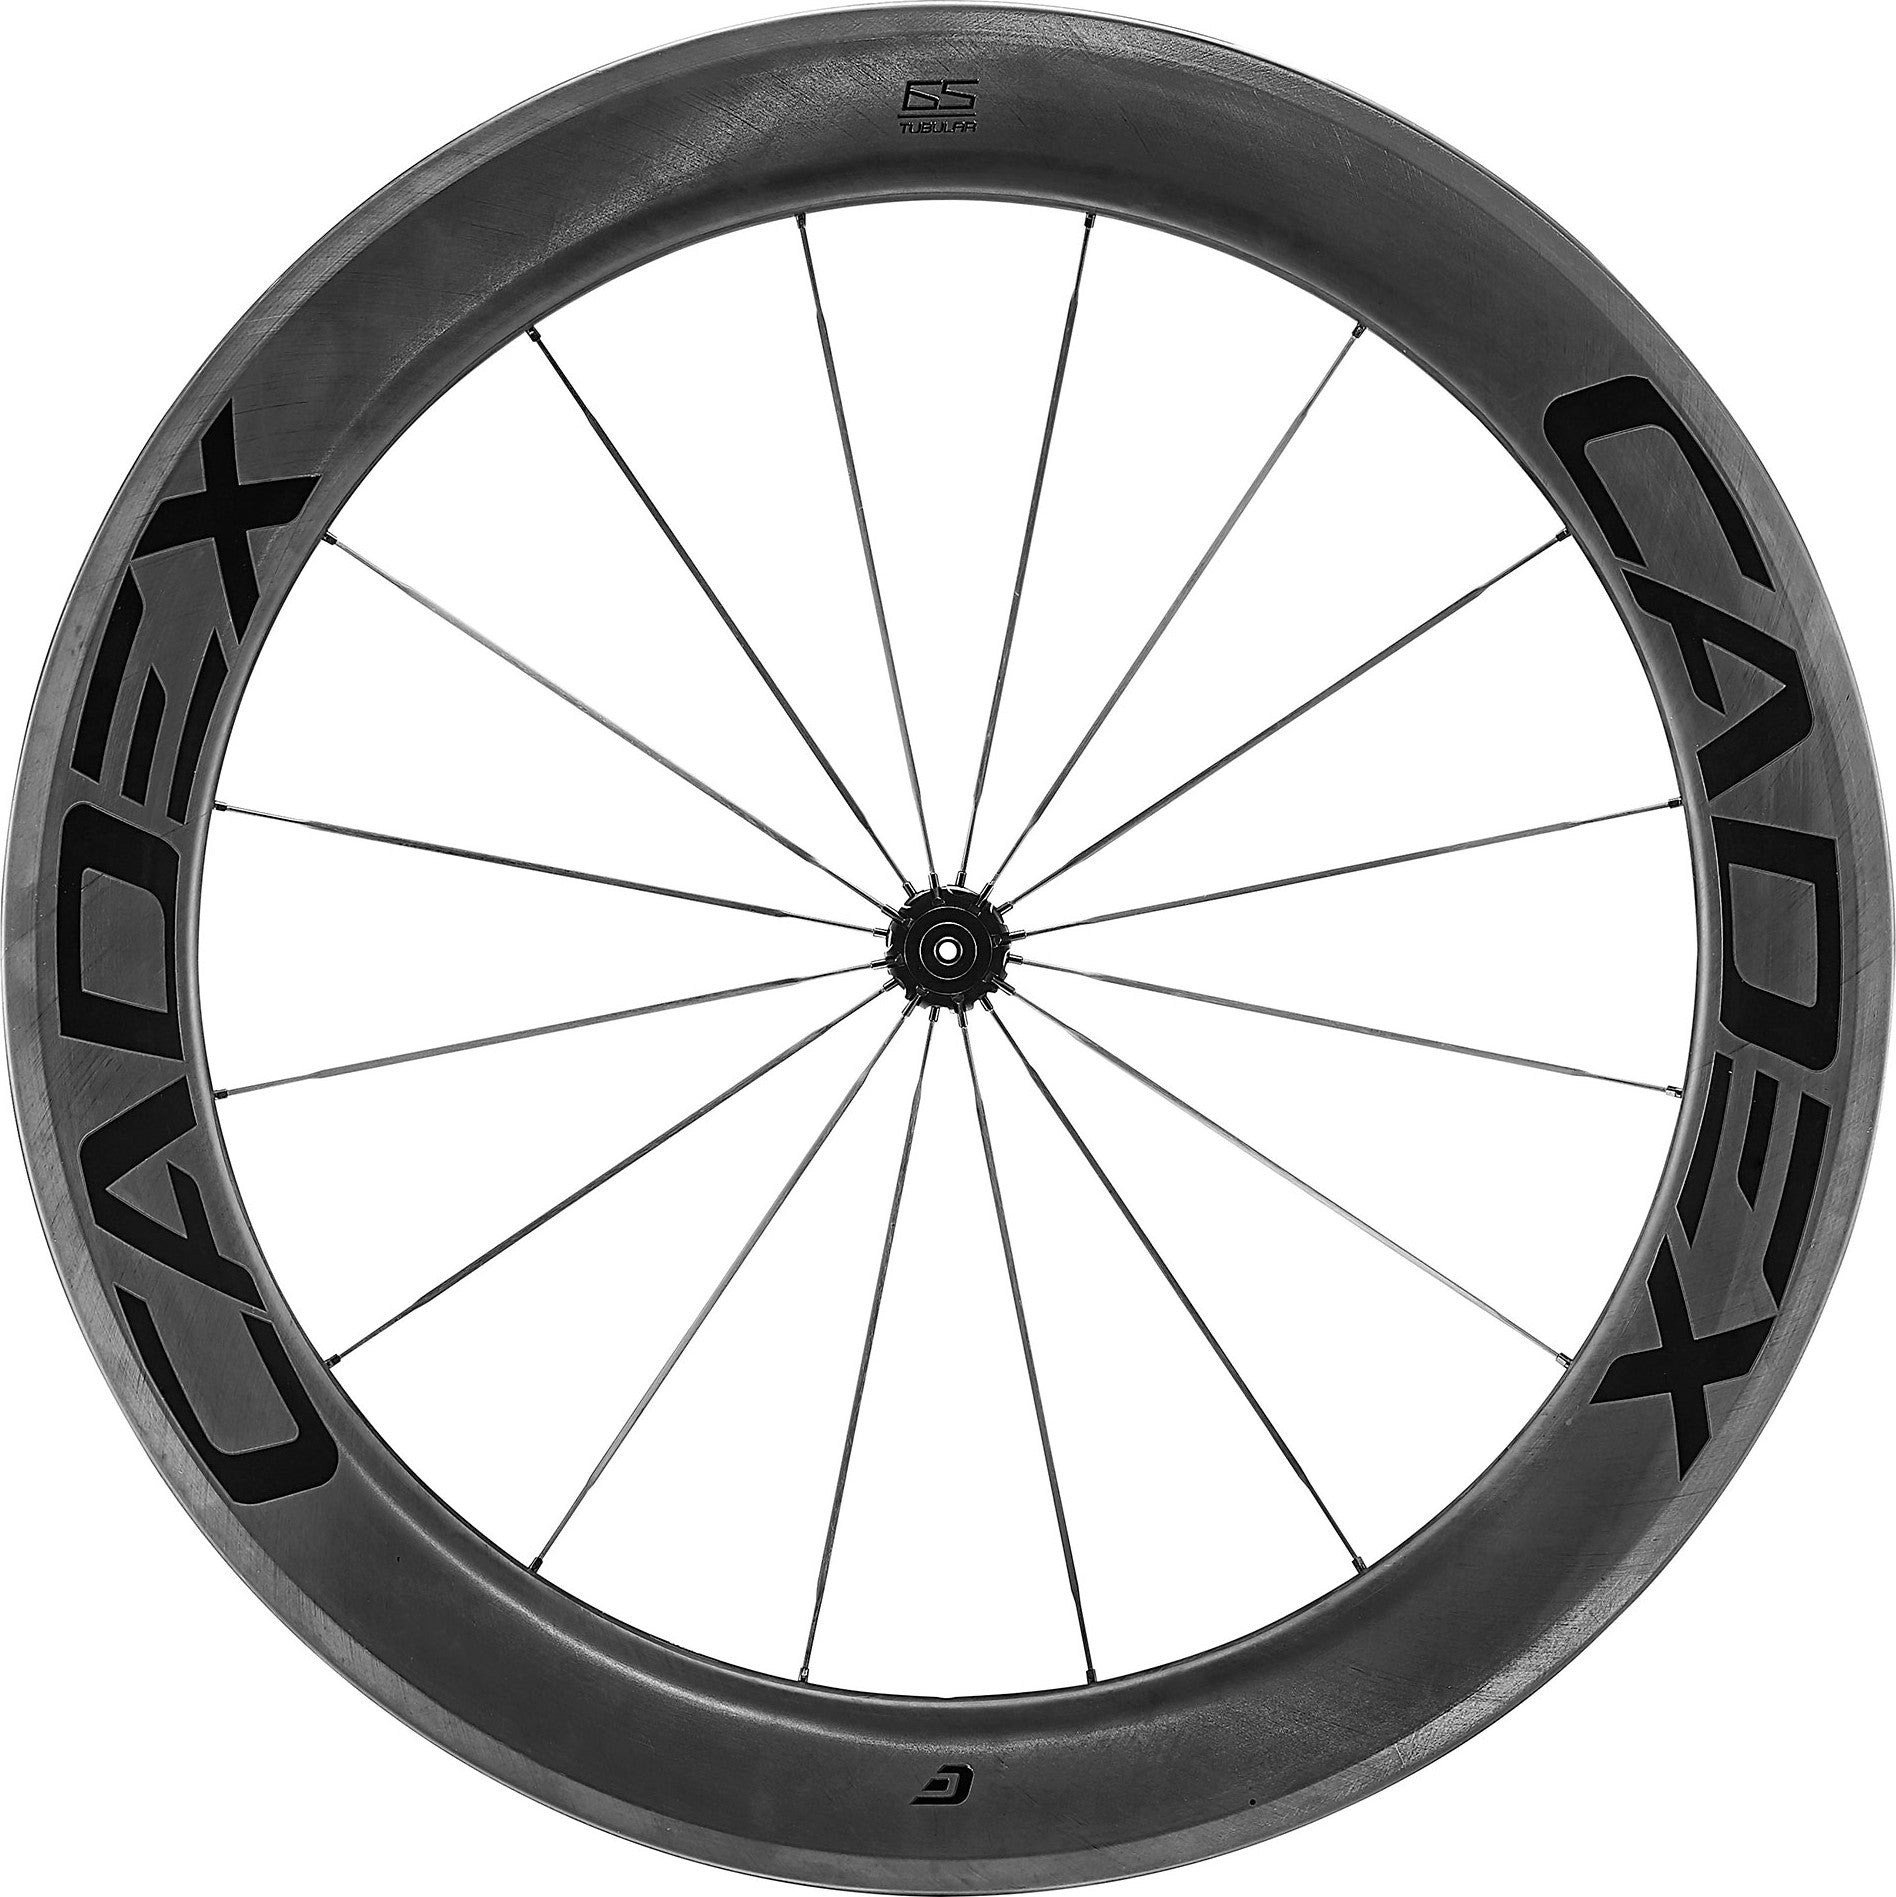 Cadex 65mm Wheelsystems Tubular 700c Carbon Wheels - Wheels - Bicycle Warehouse